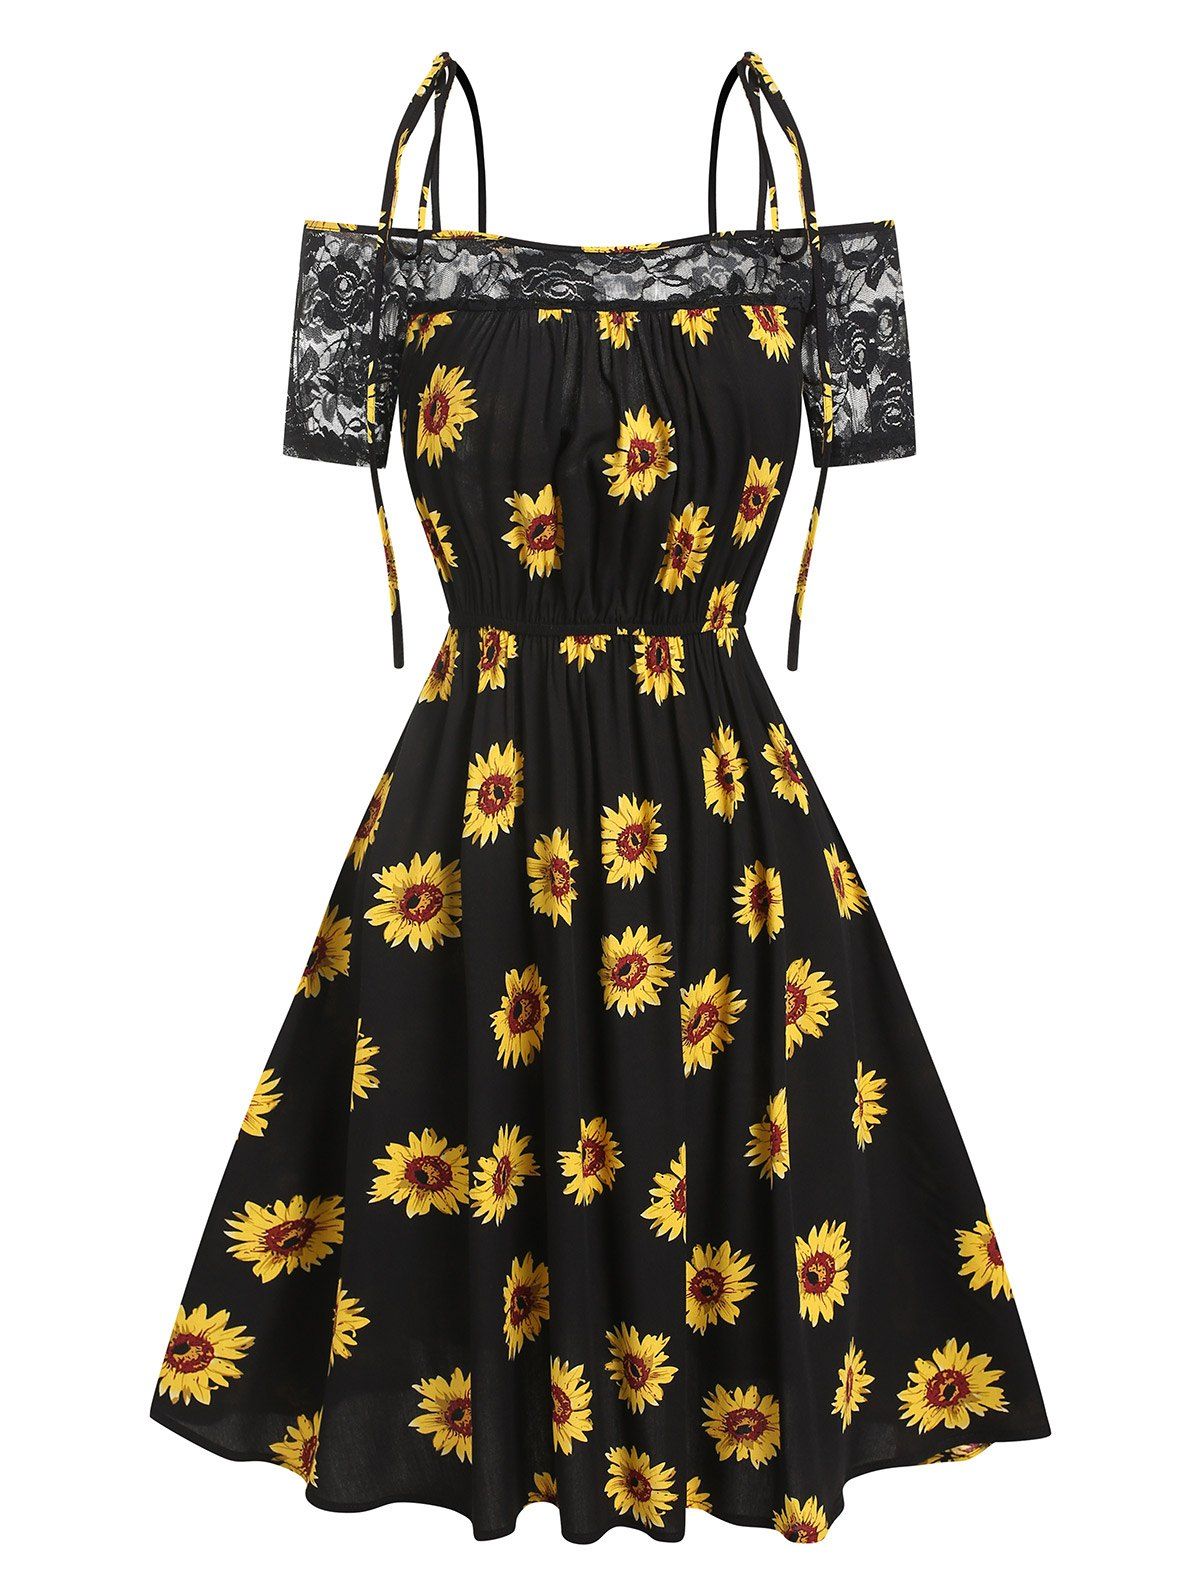 Sunflower Print Sundress Cold Shoulder Floral Lace Panel Vacation Dress Tie Knot Spaghetti Strap A Line Dress - BLACK XL